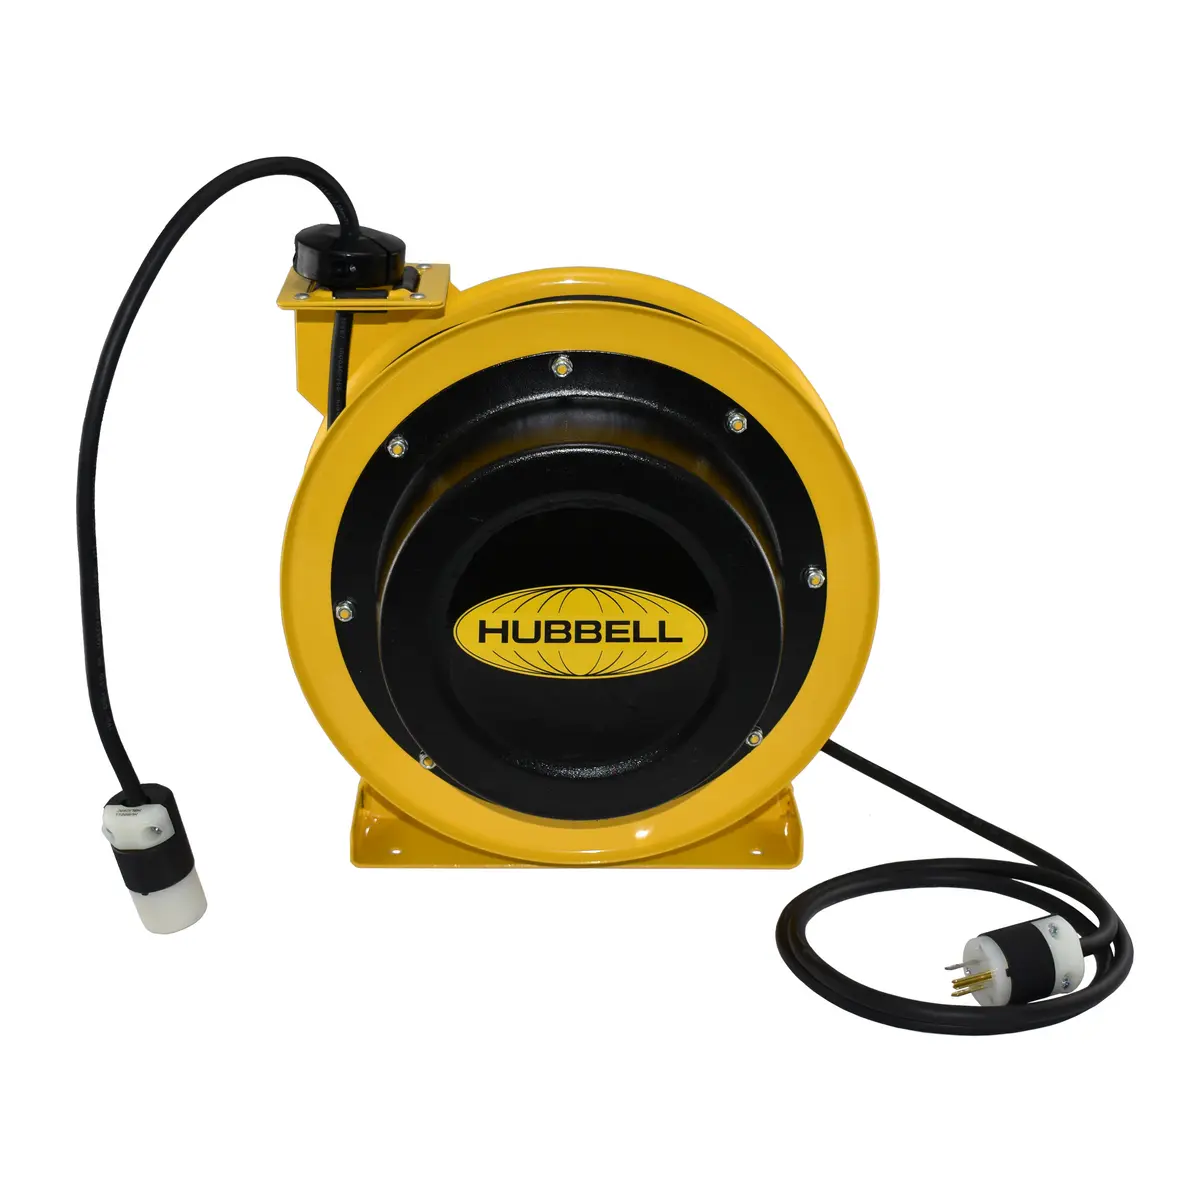 Hubbell Retractable Cord Reel Manufacturers, lwm tus neeg, Hoobkas